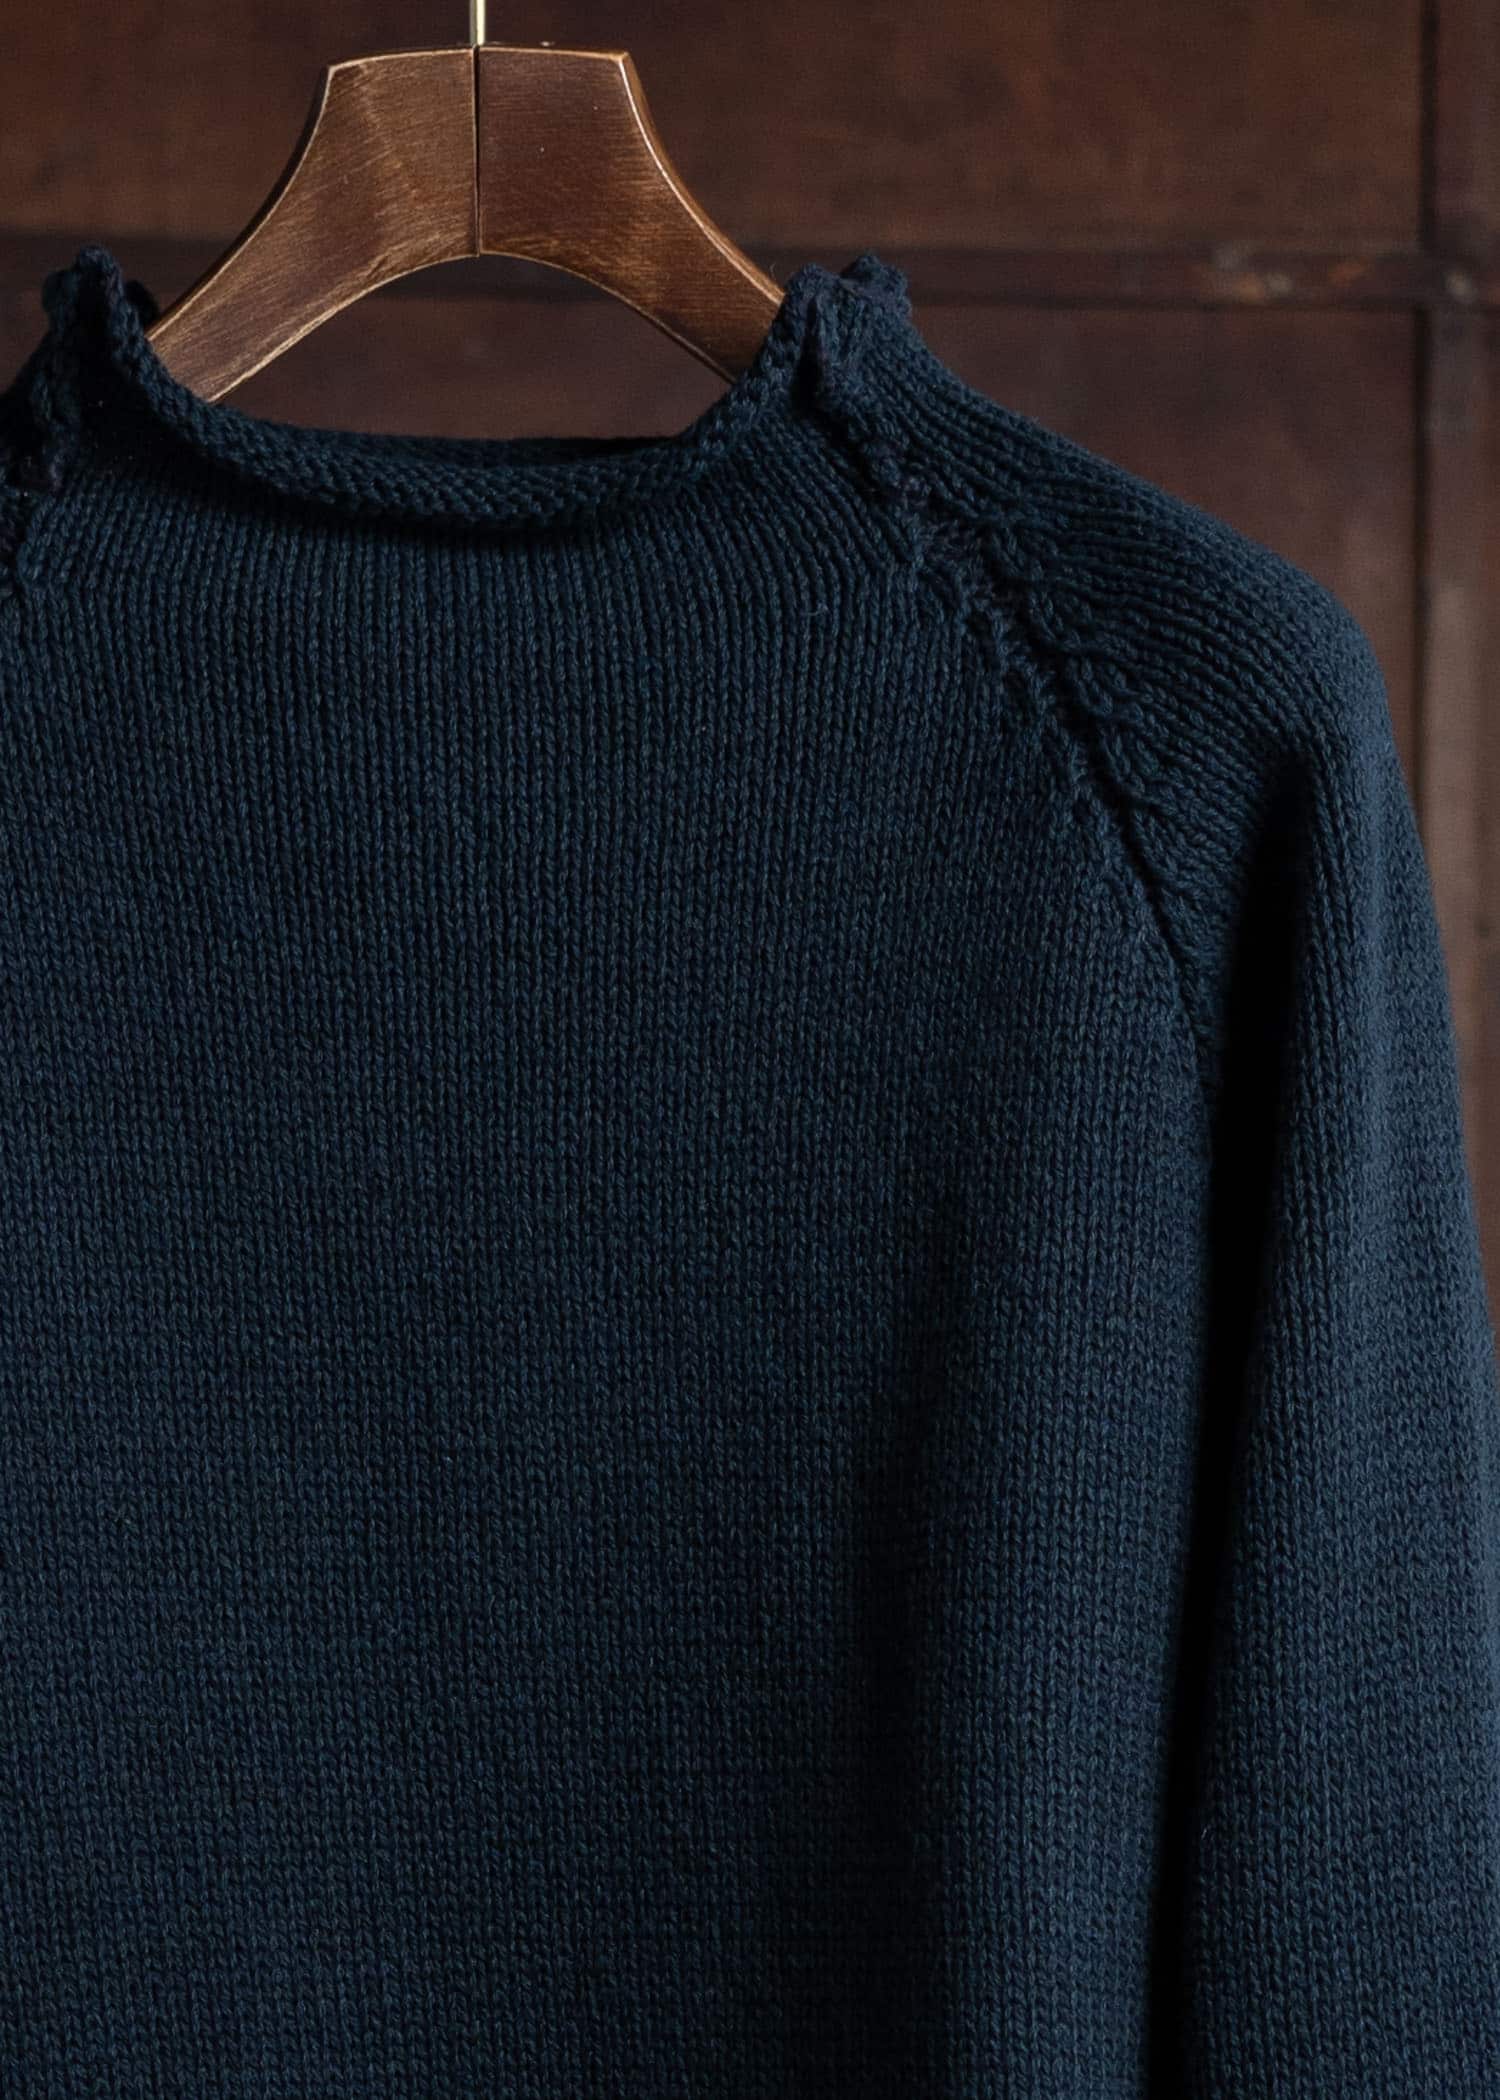 XENIA TELUNTS Fisherman Sweater	Indigo-dyed Black